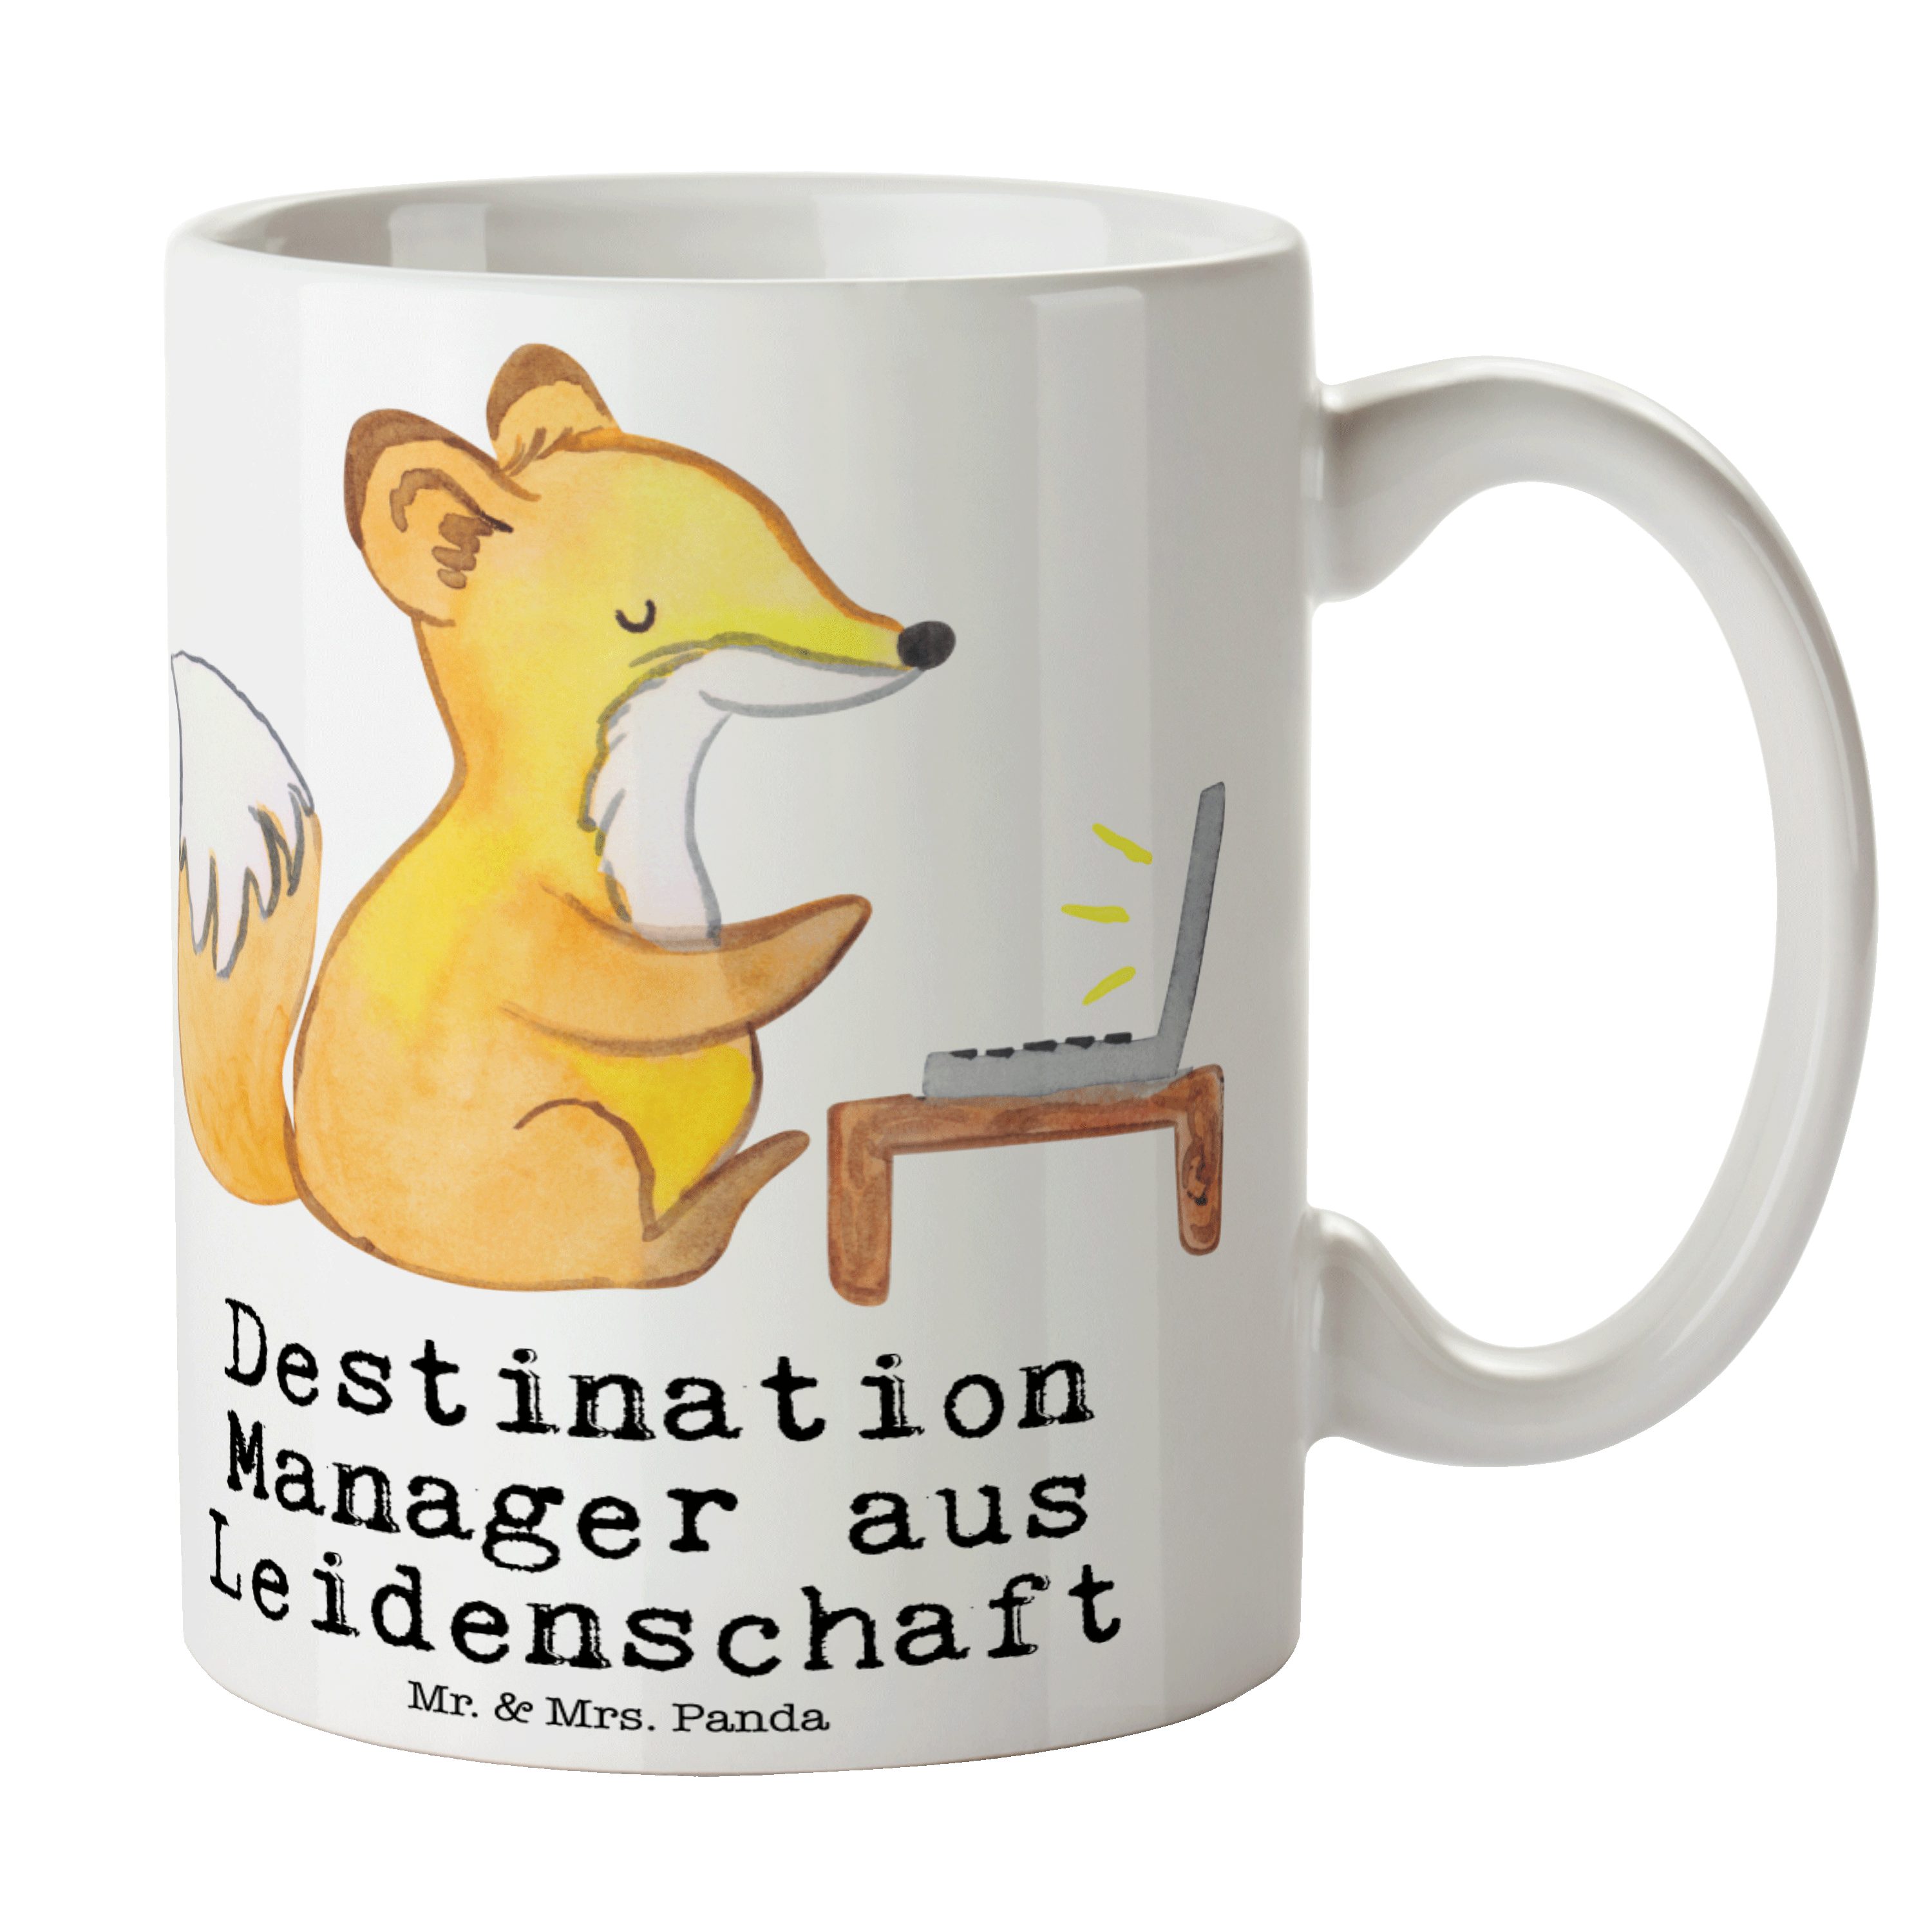 Mr. & Mrs. Panda Tasse Destination Manager aus Leidenschaft - Weiß - Geschenk, Geschenk Tass, Keramik